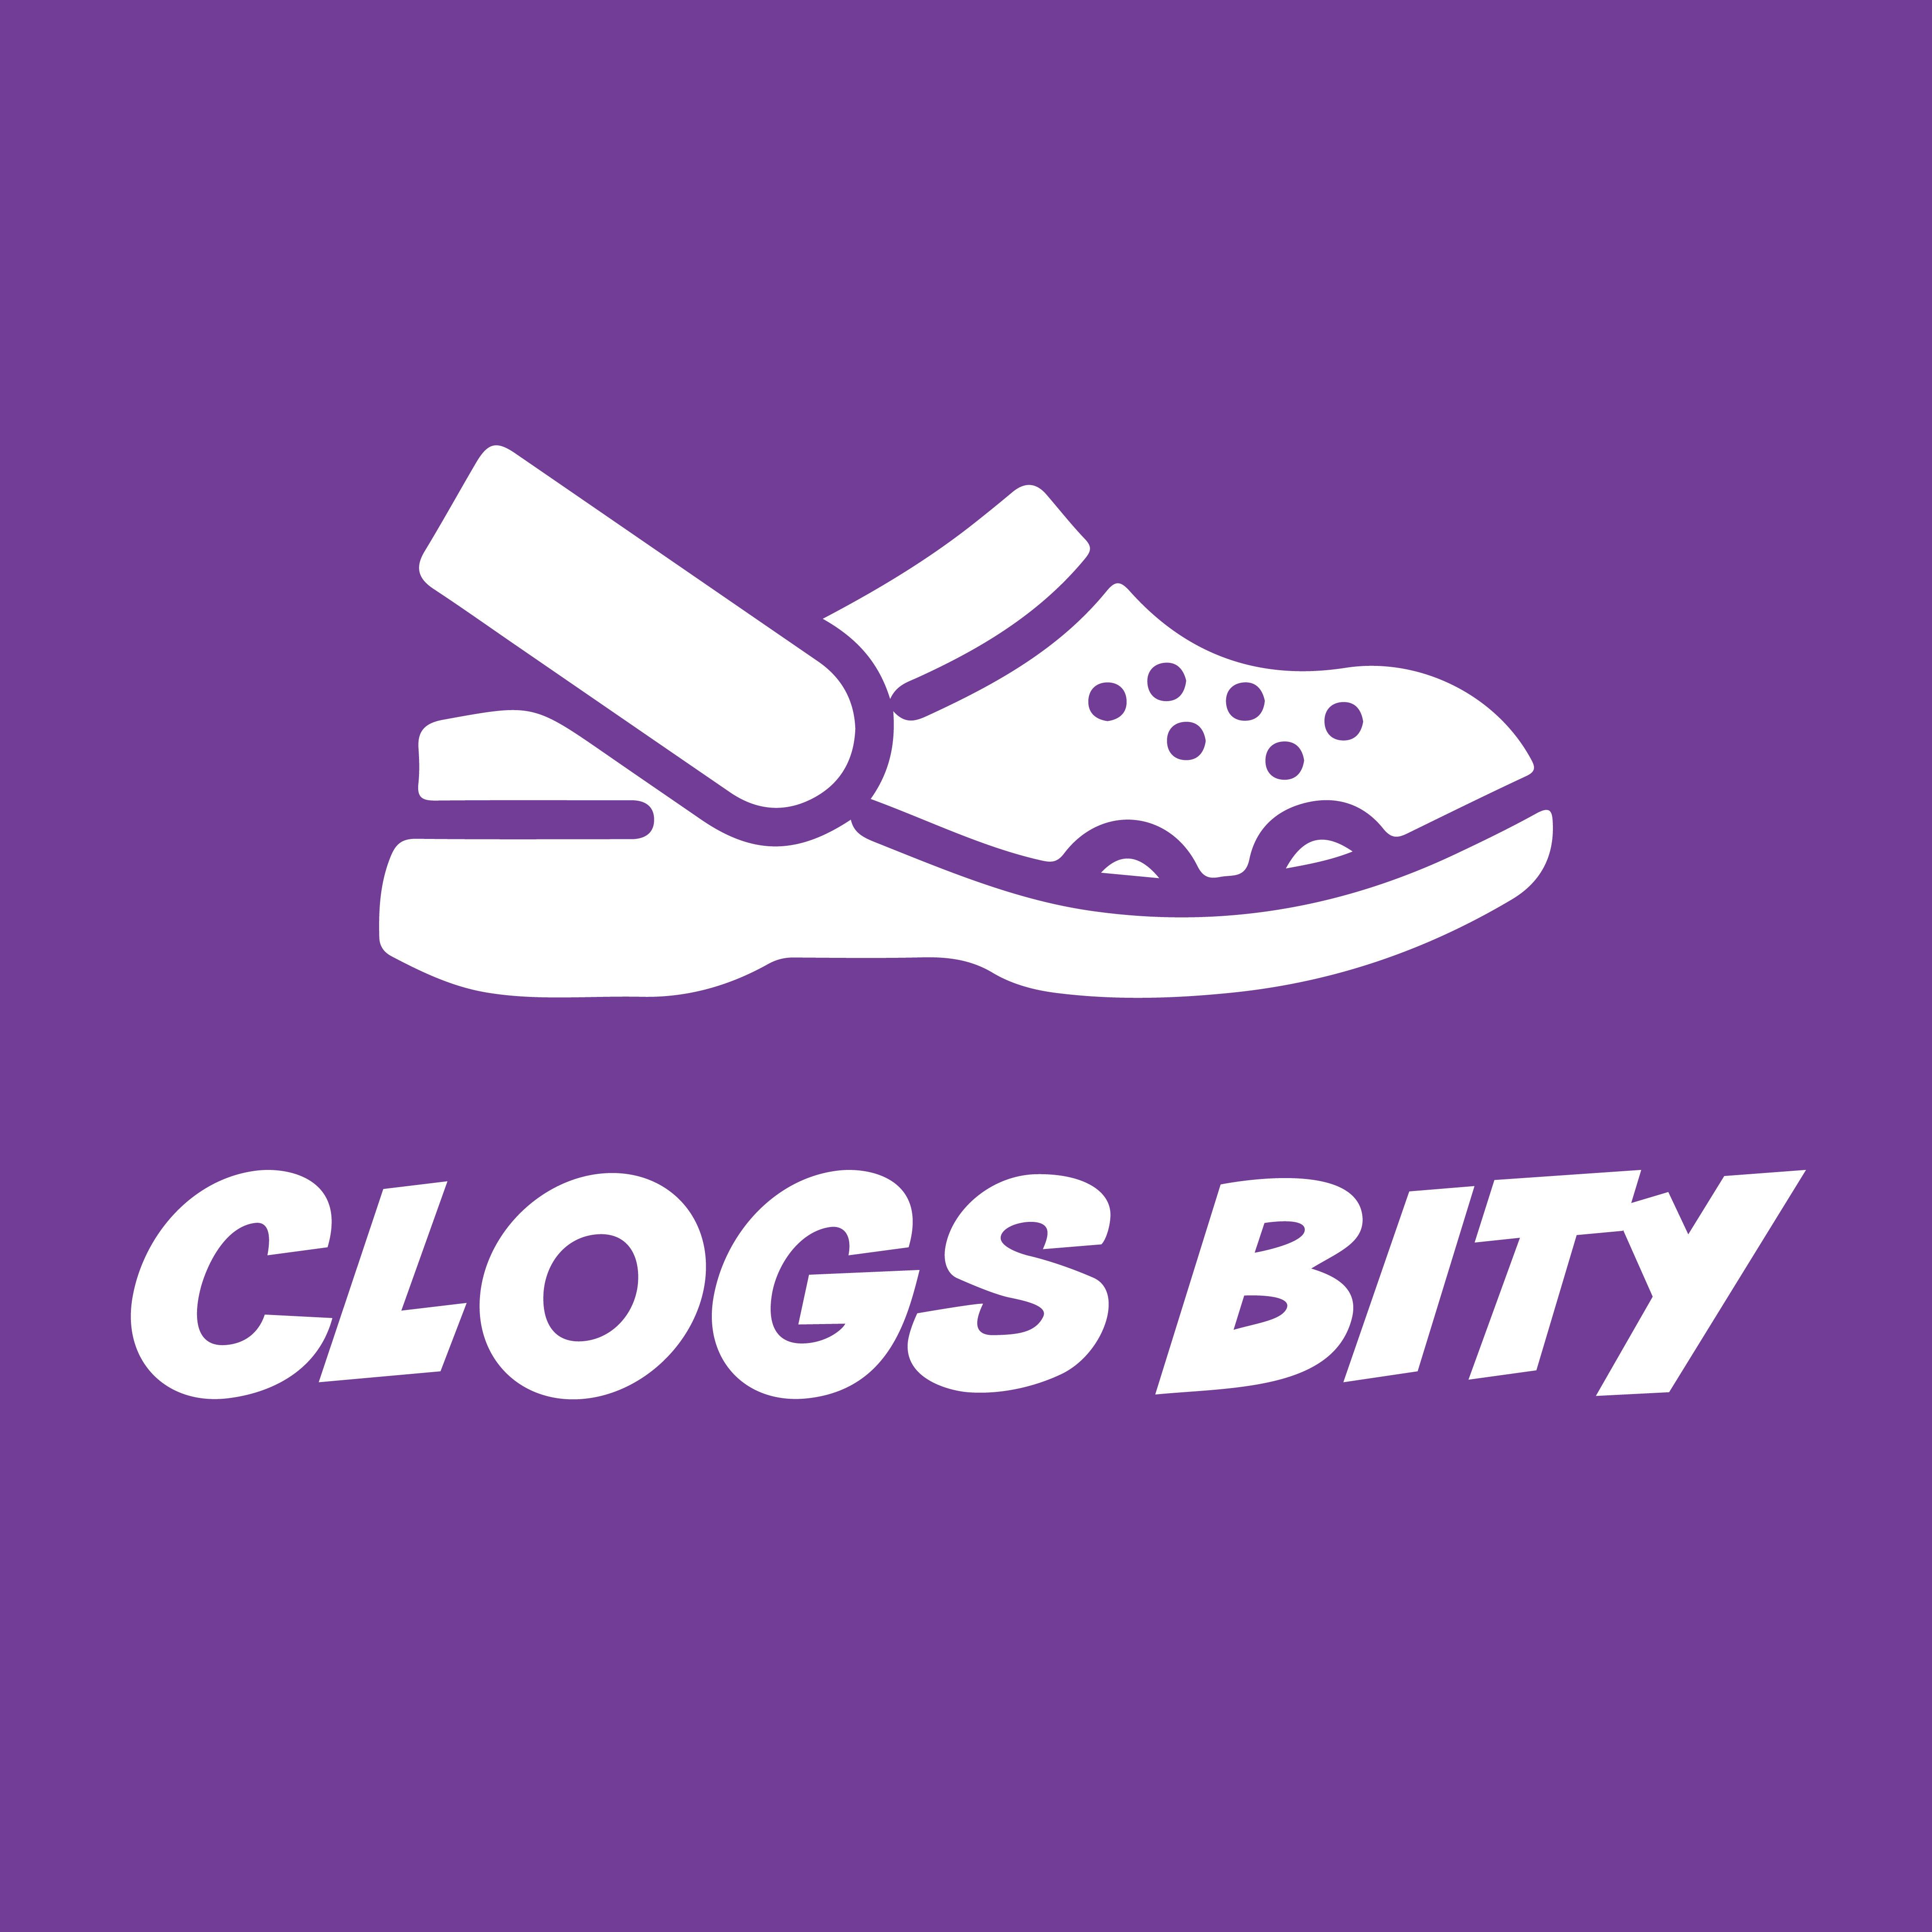 clogsbity